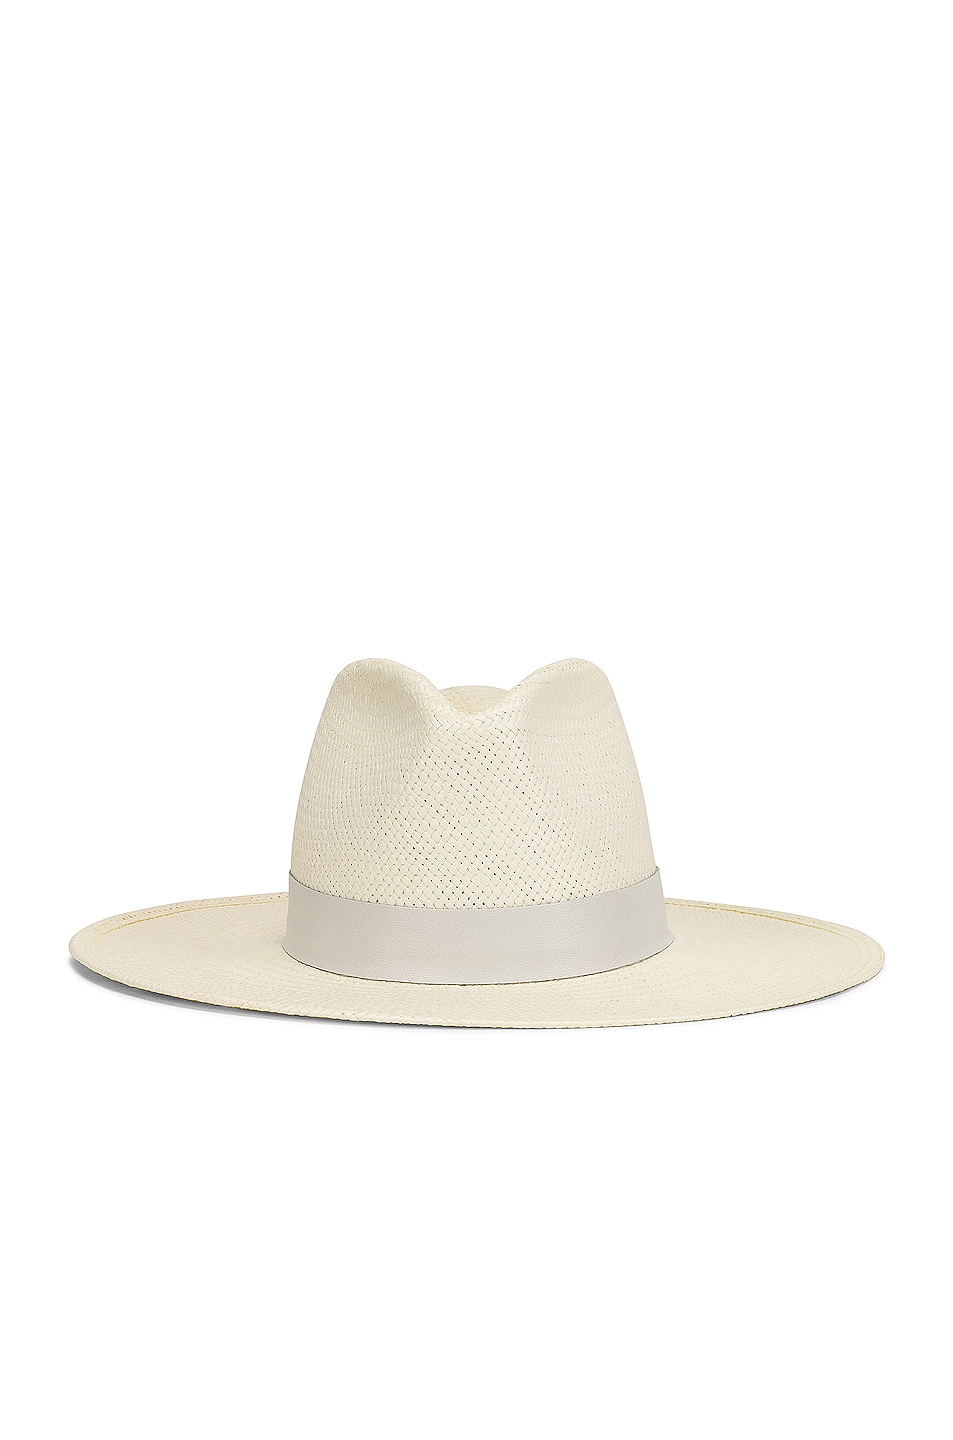 Hamilton Hat in White